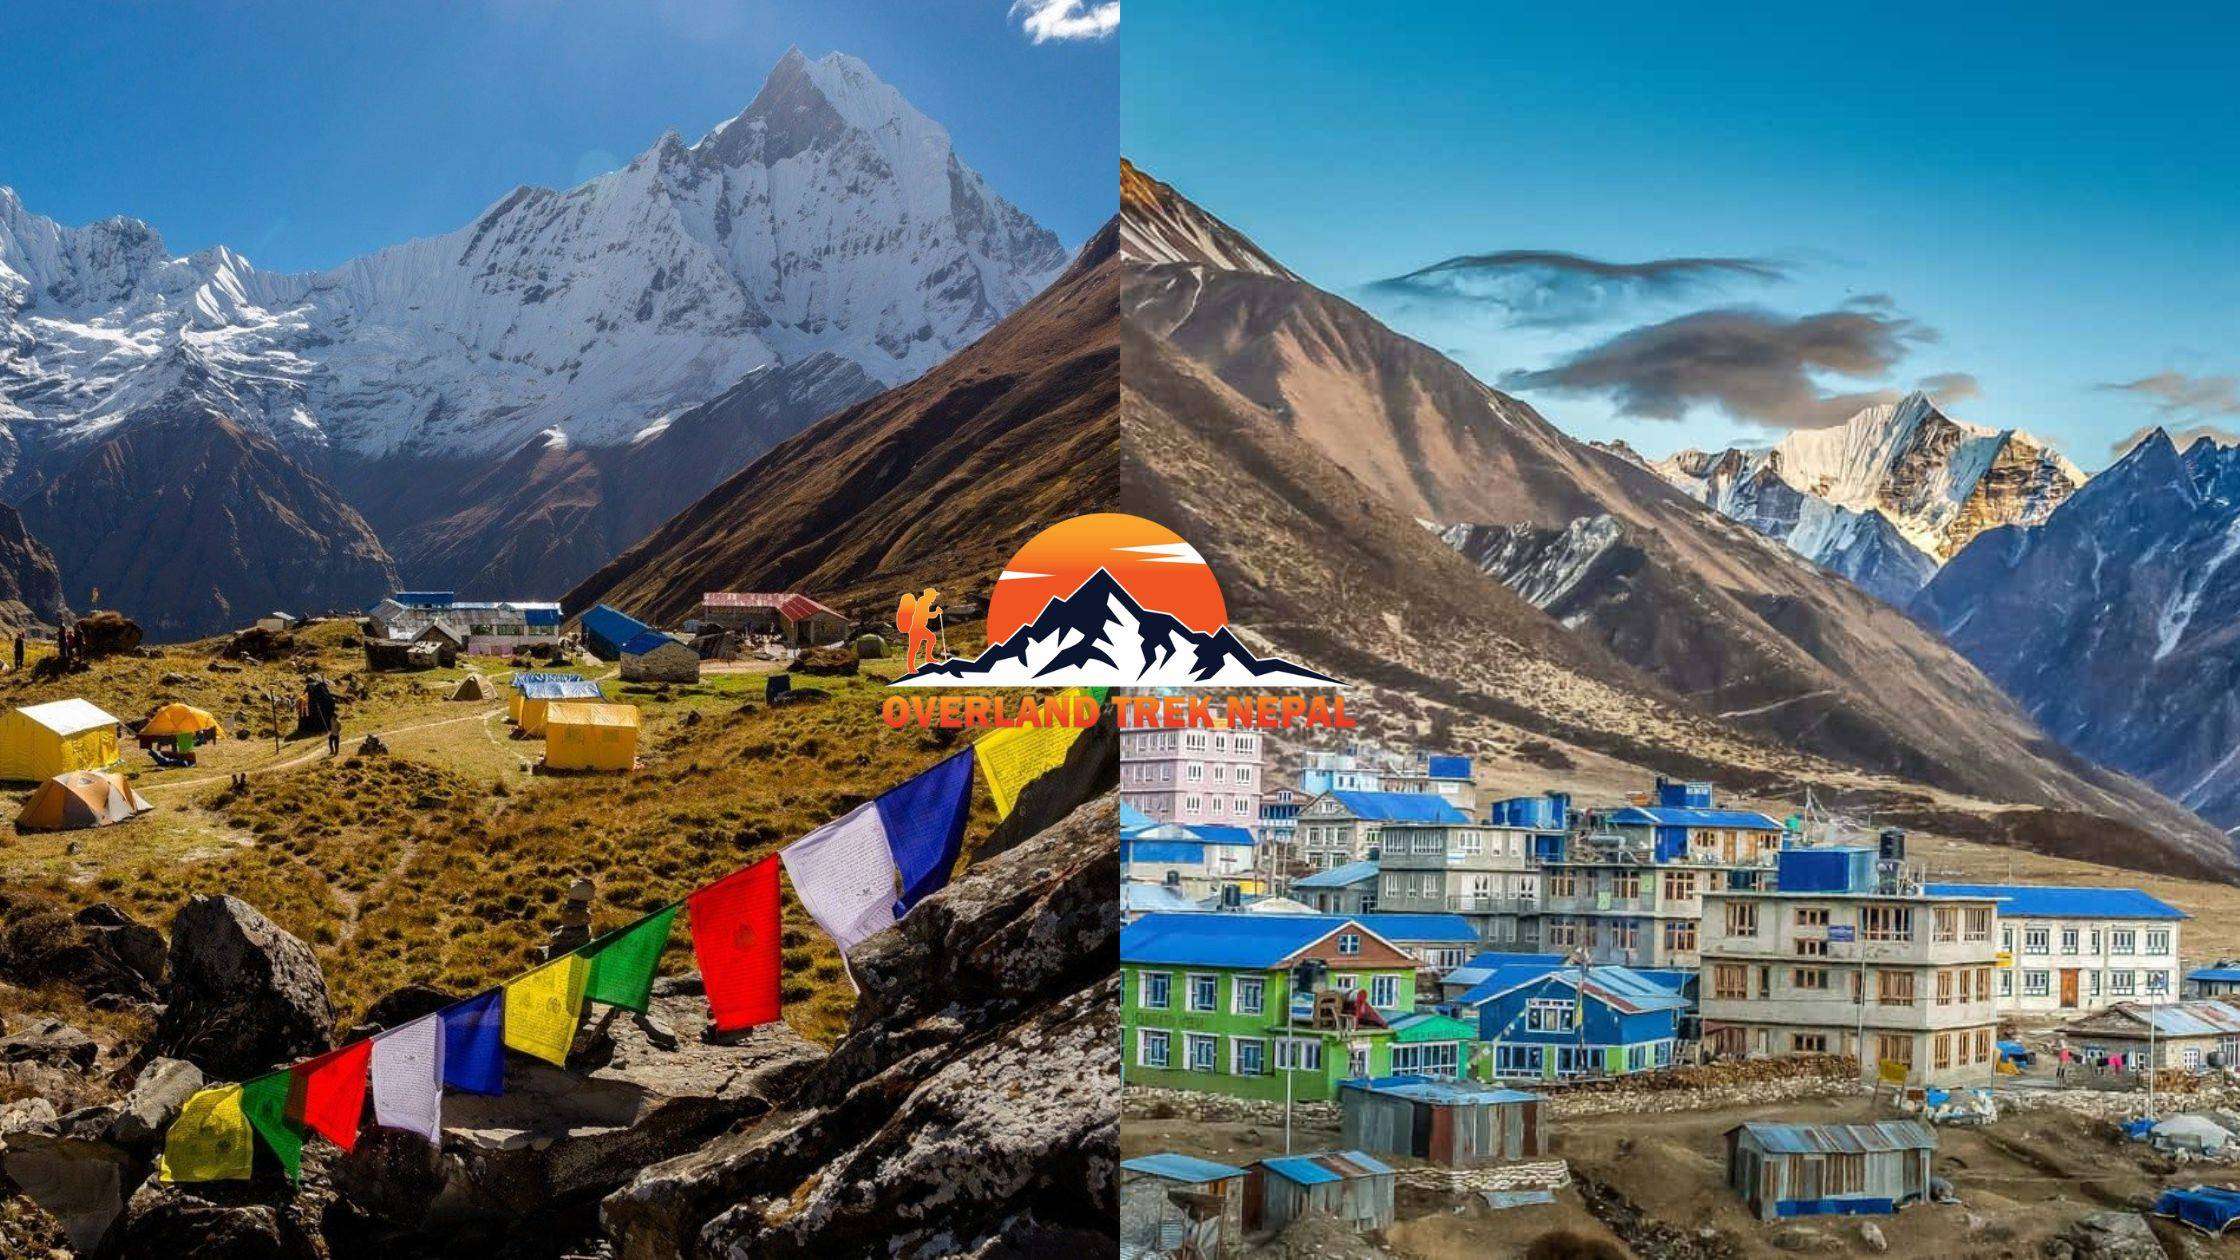 Trek Compare Between Annapurna Circuit and Langtang Helambu